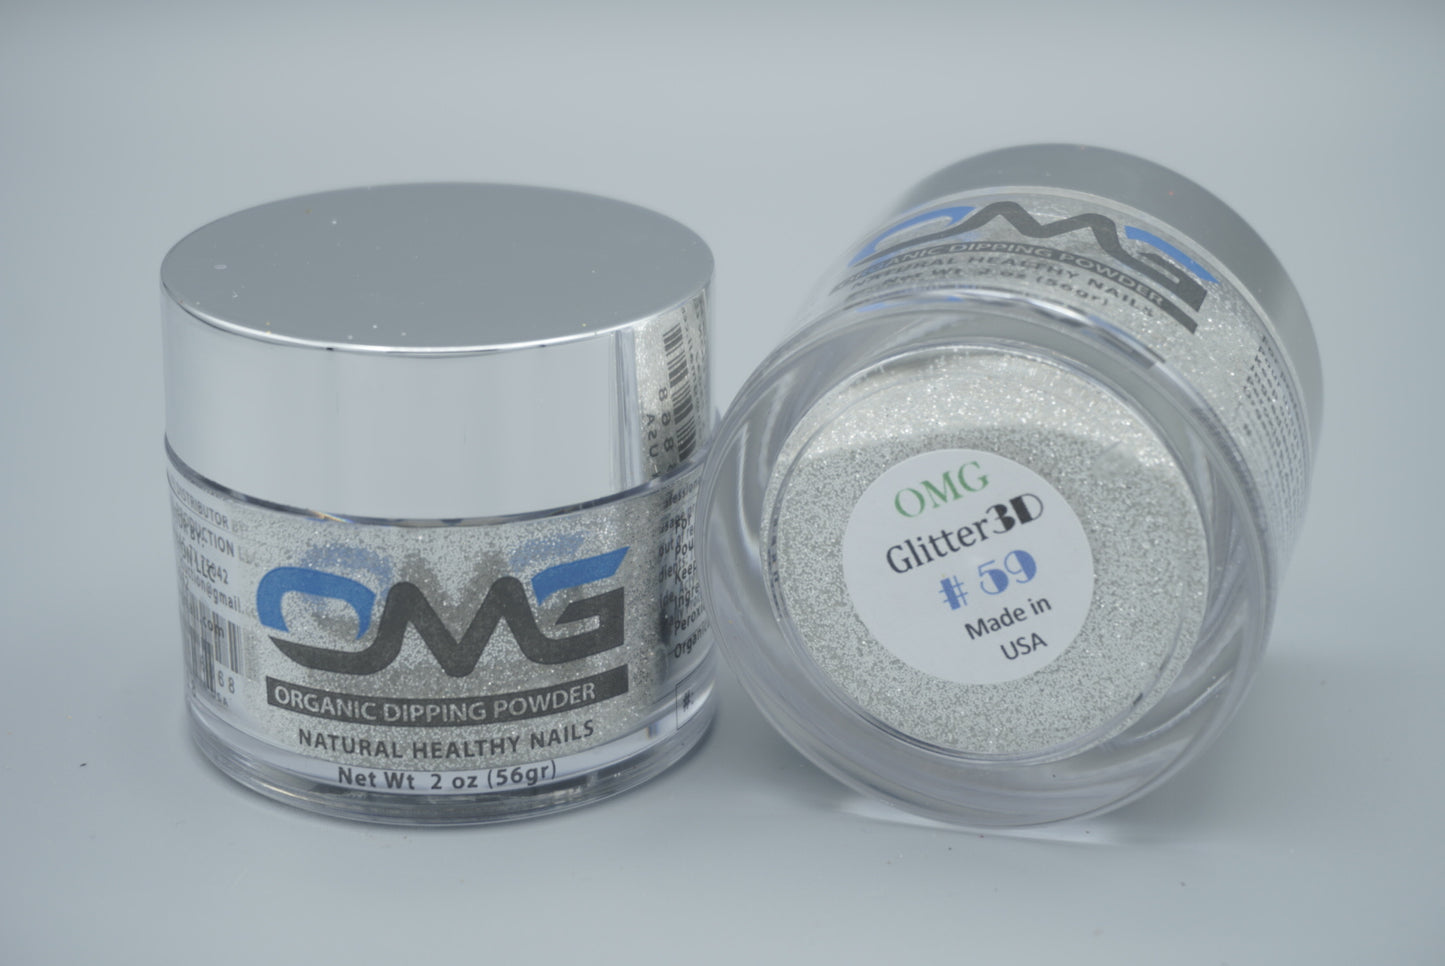 OMG 3D Glitter Dipping Powder - #059